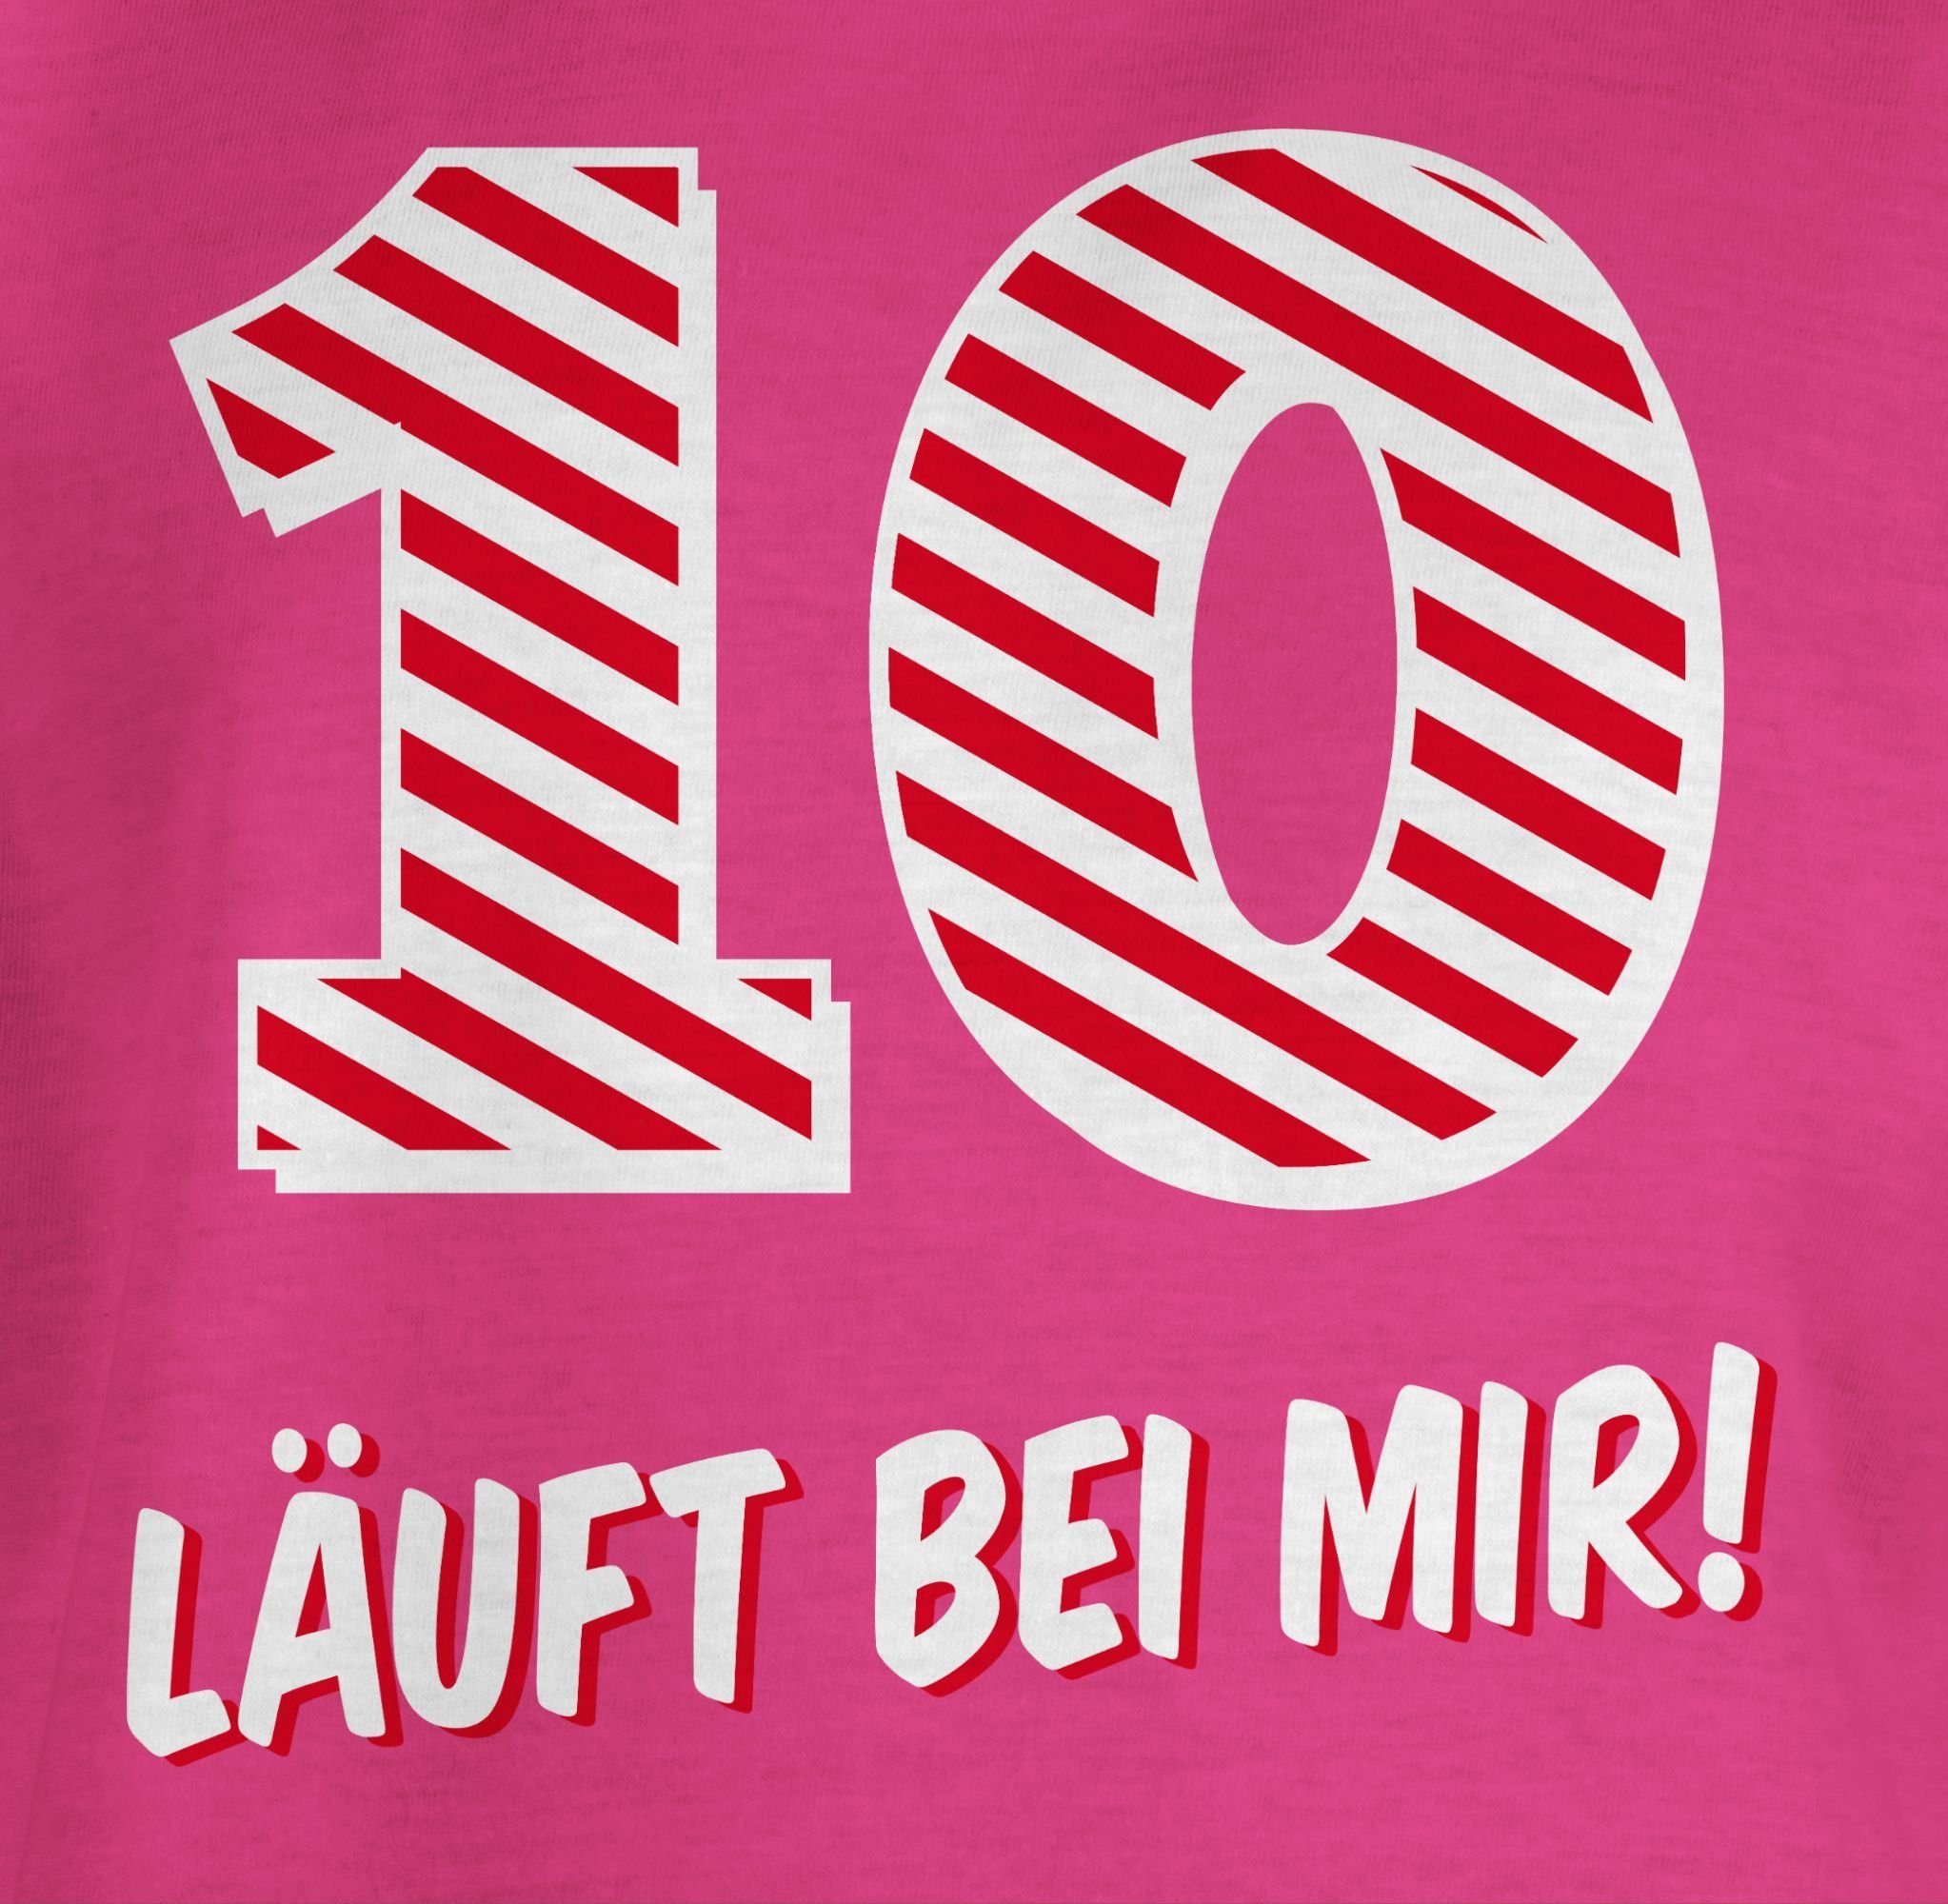 T-Shirt bei mir Fuchsia 1 Läuft Geburtstag Shirtracer 10. Zehnter